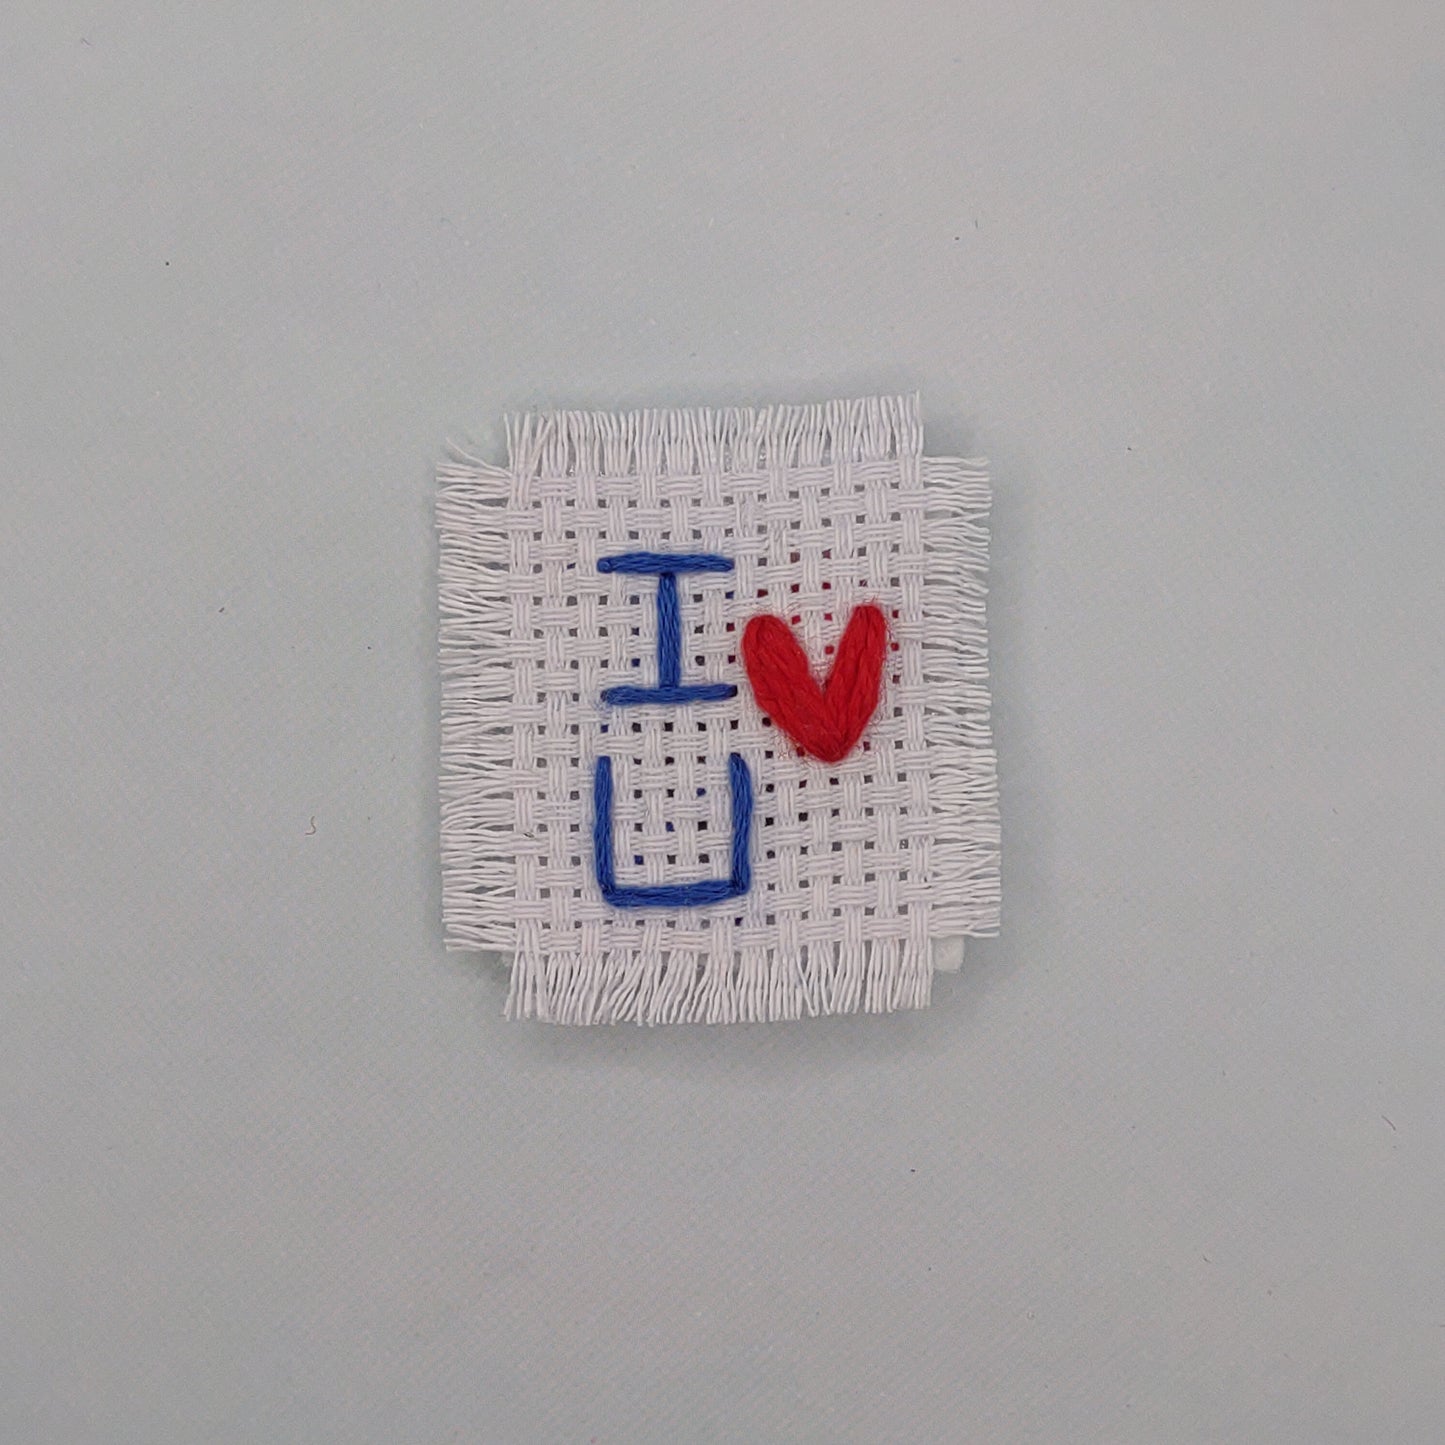 I Heart U - Caring Magnets - Handmade Embroidery